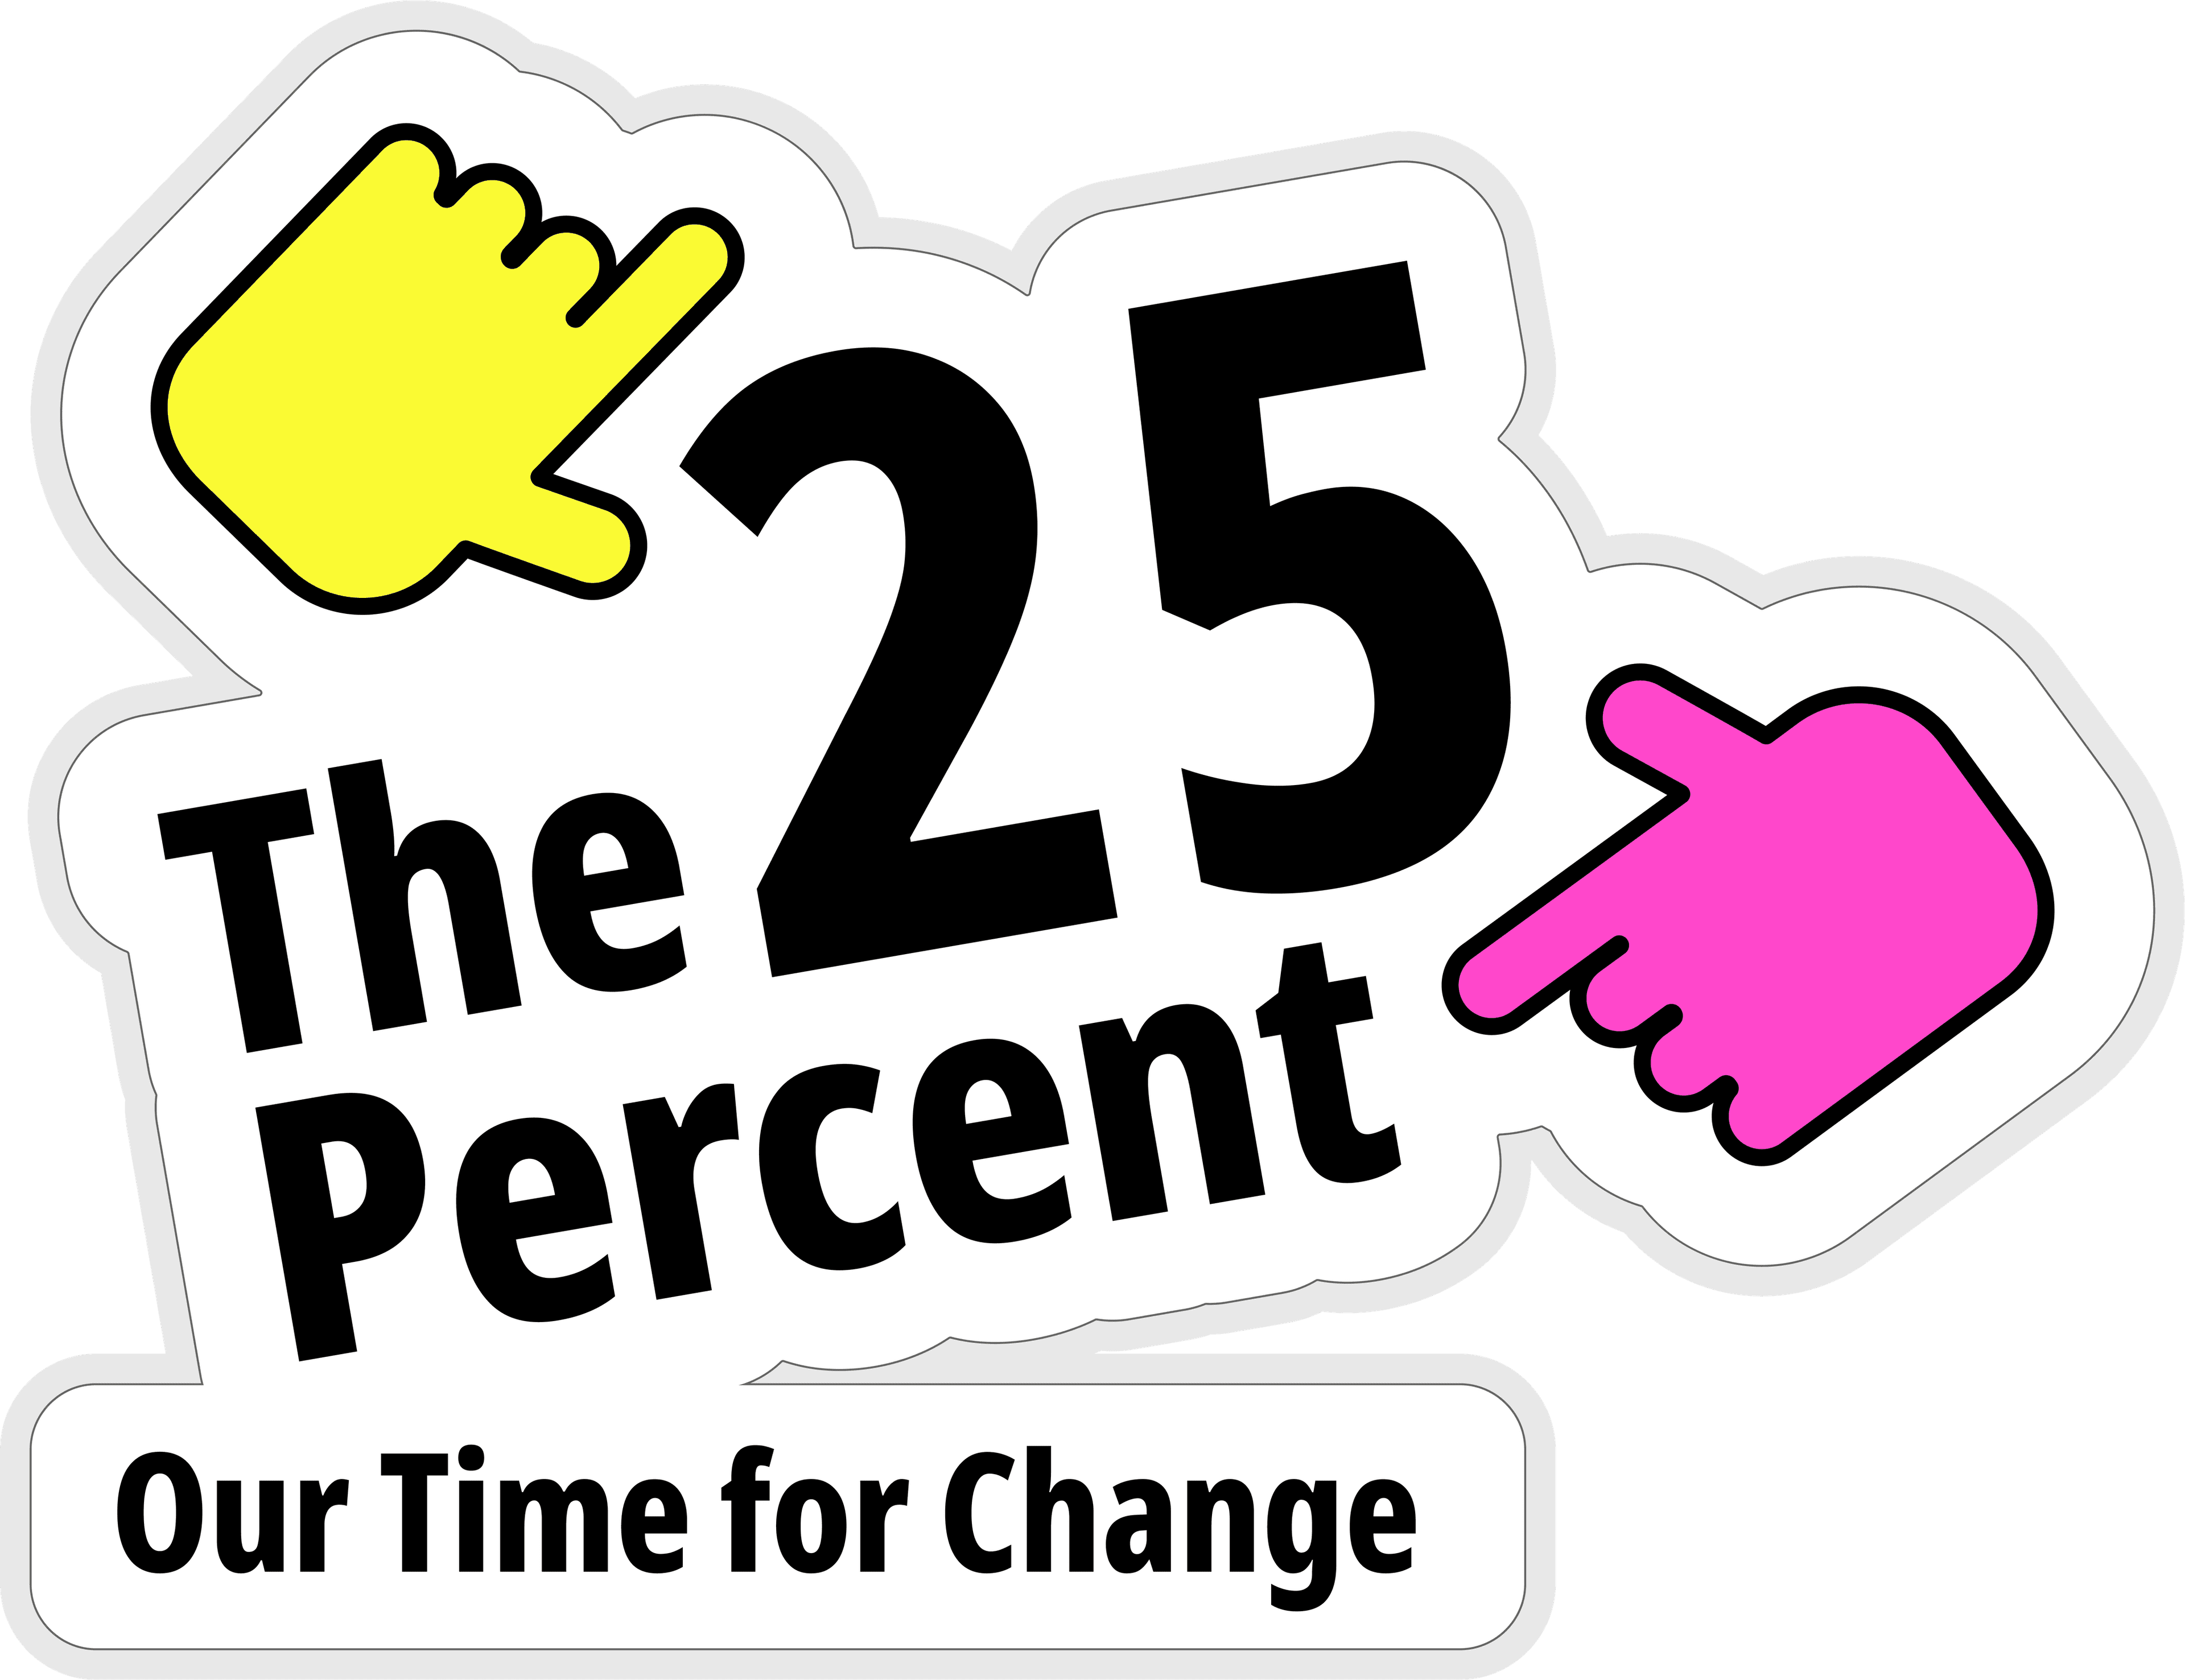 The 25 Percent